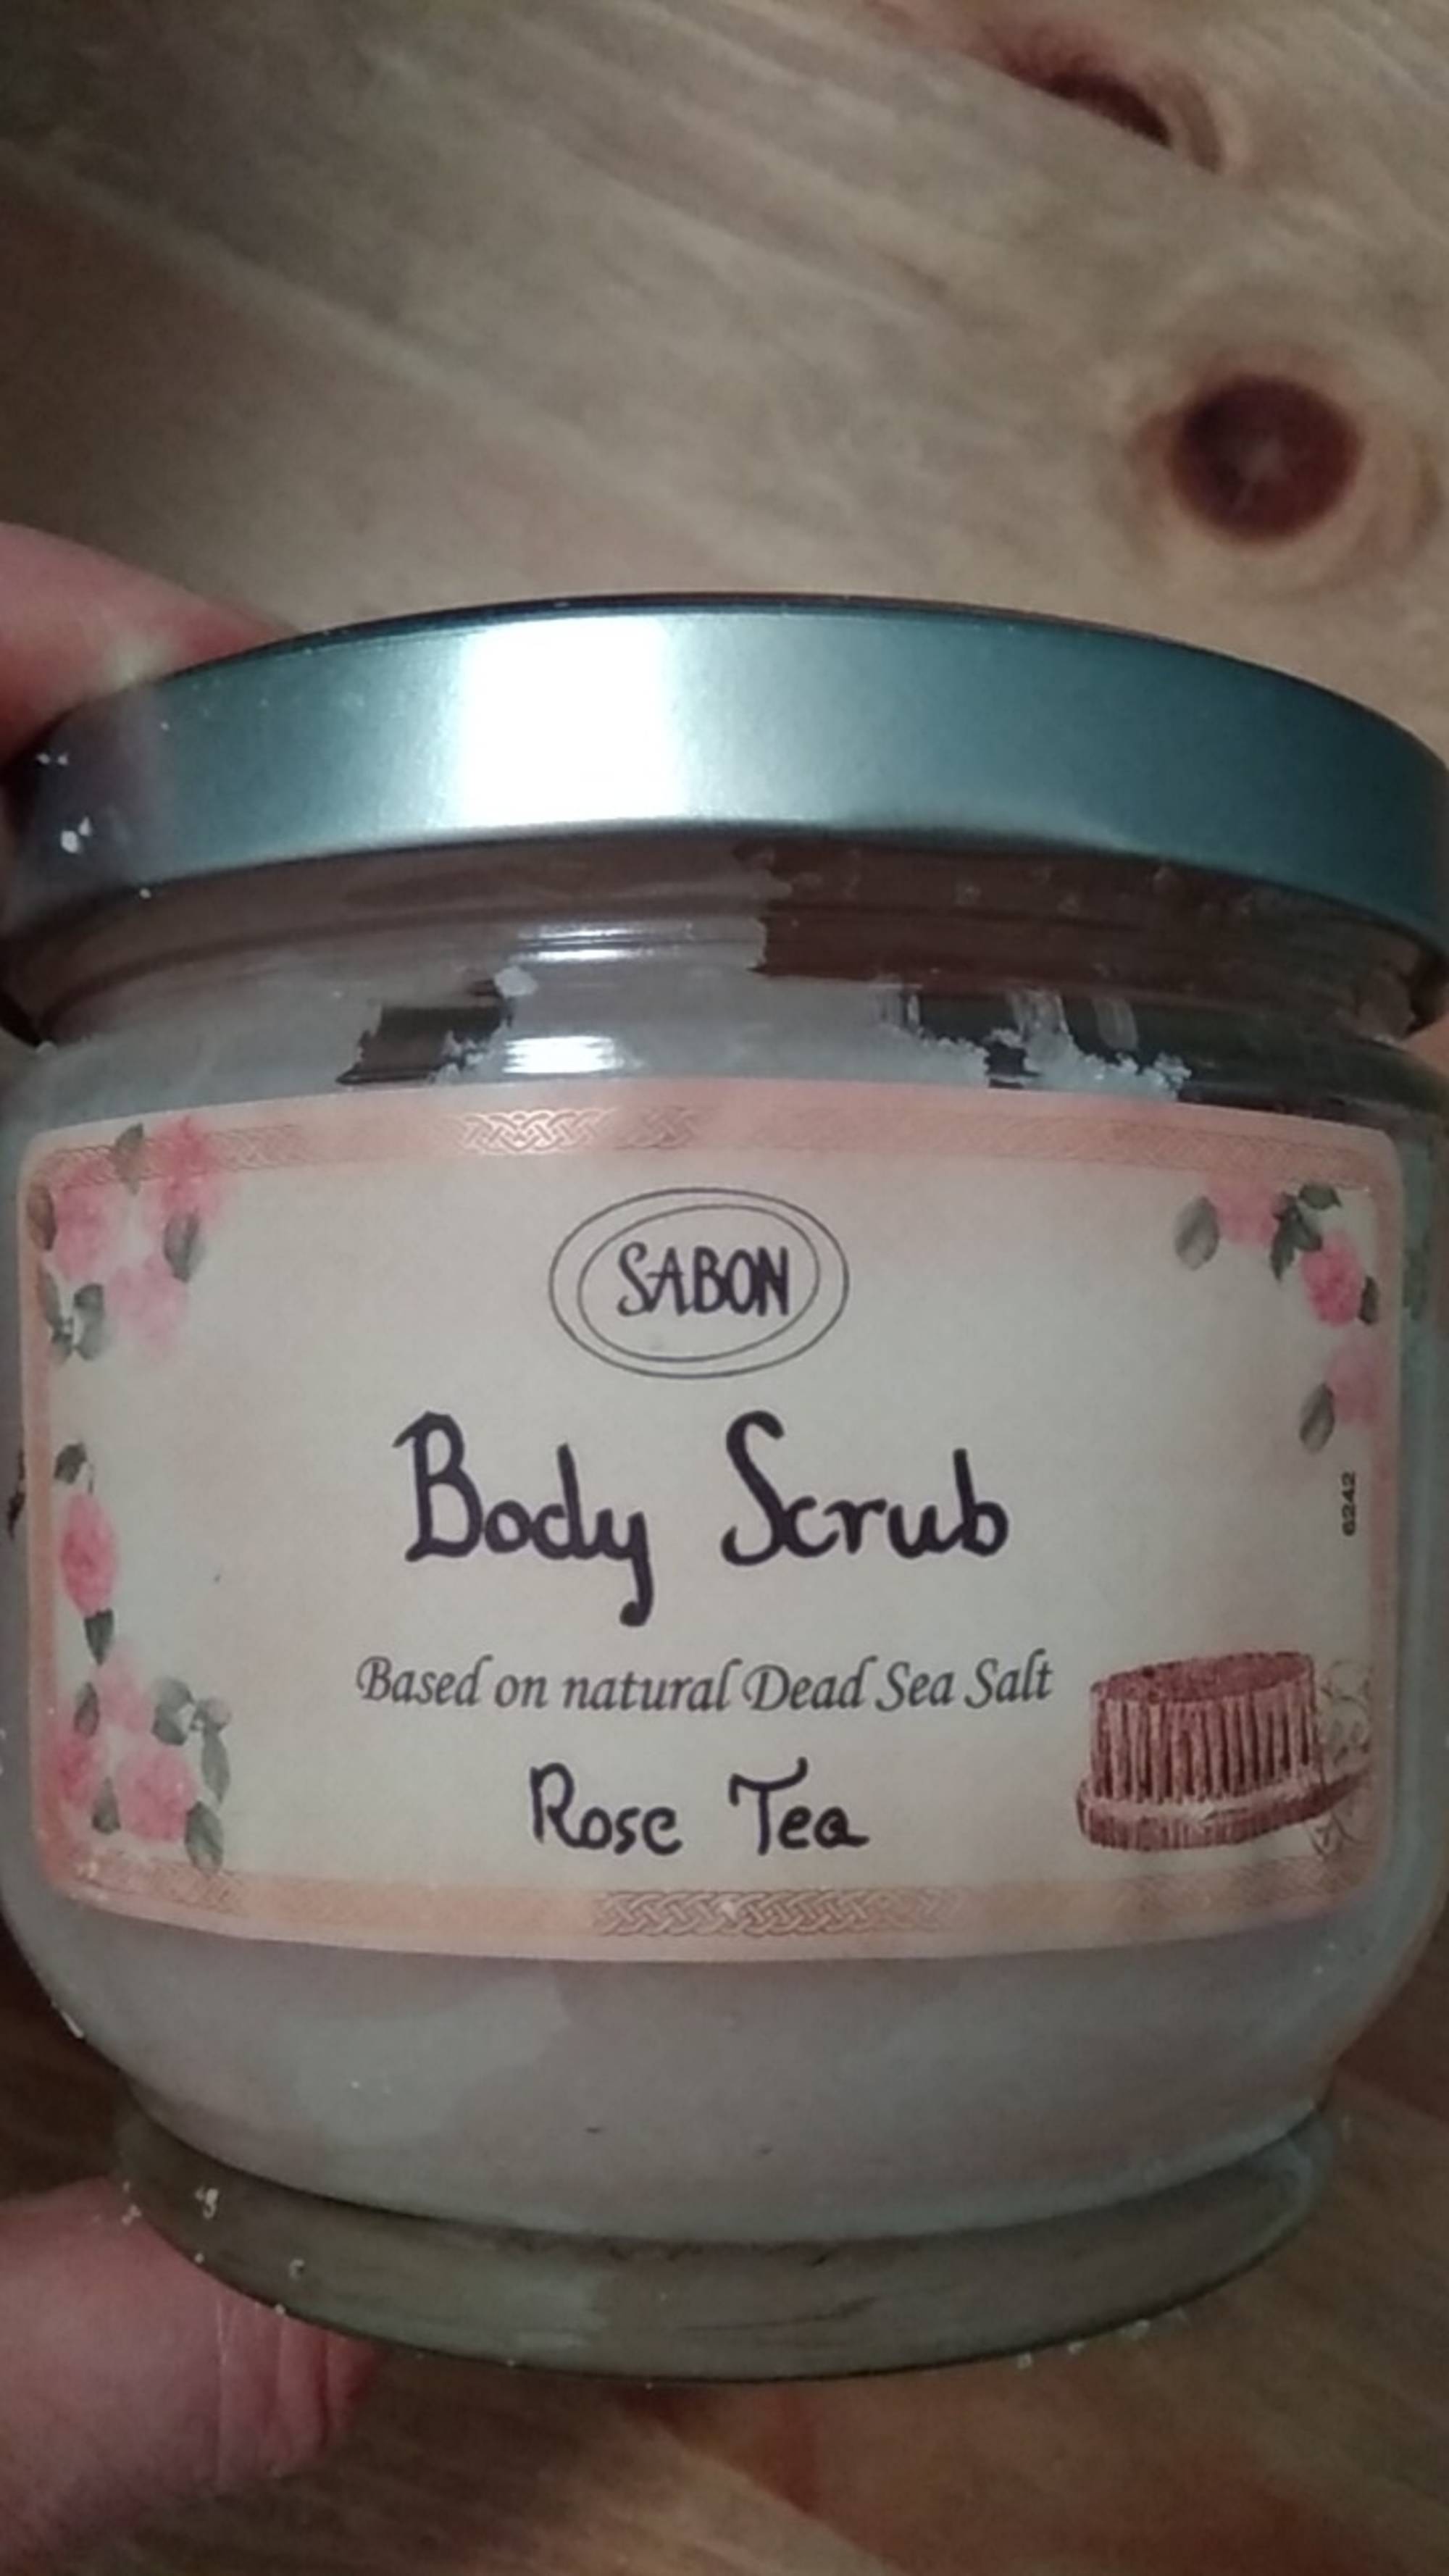 SABON - Body Scrub - Based on natural dead sea salt